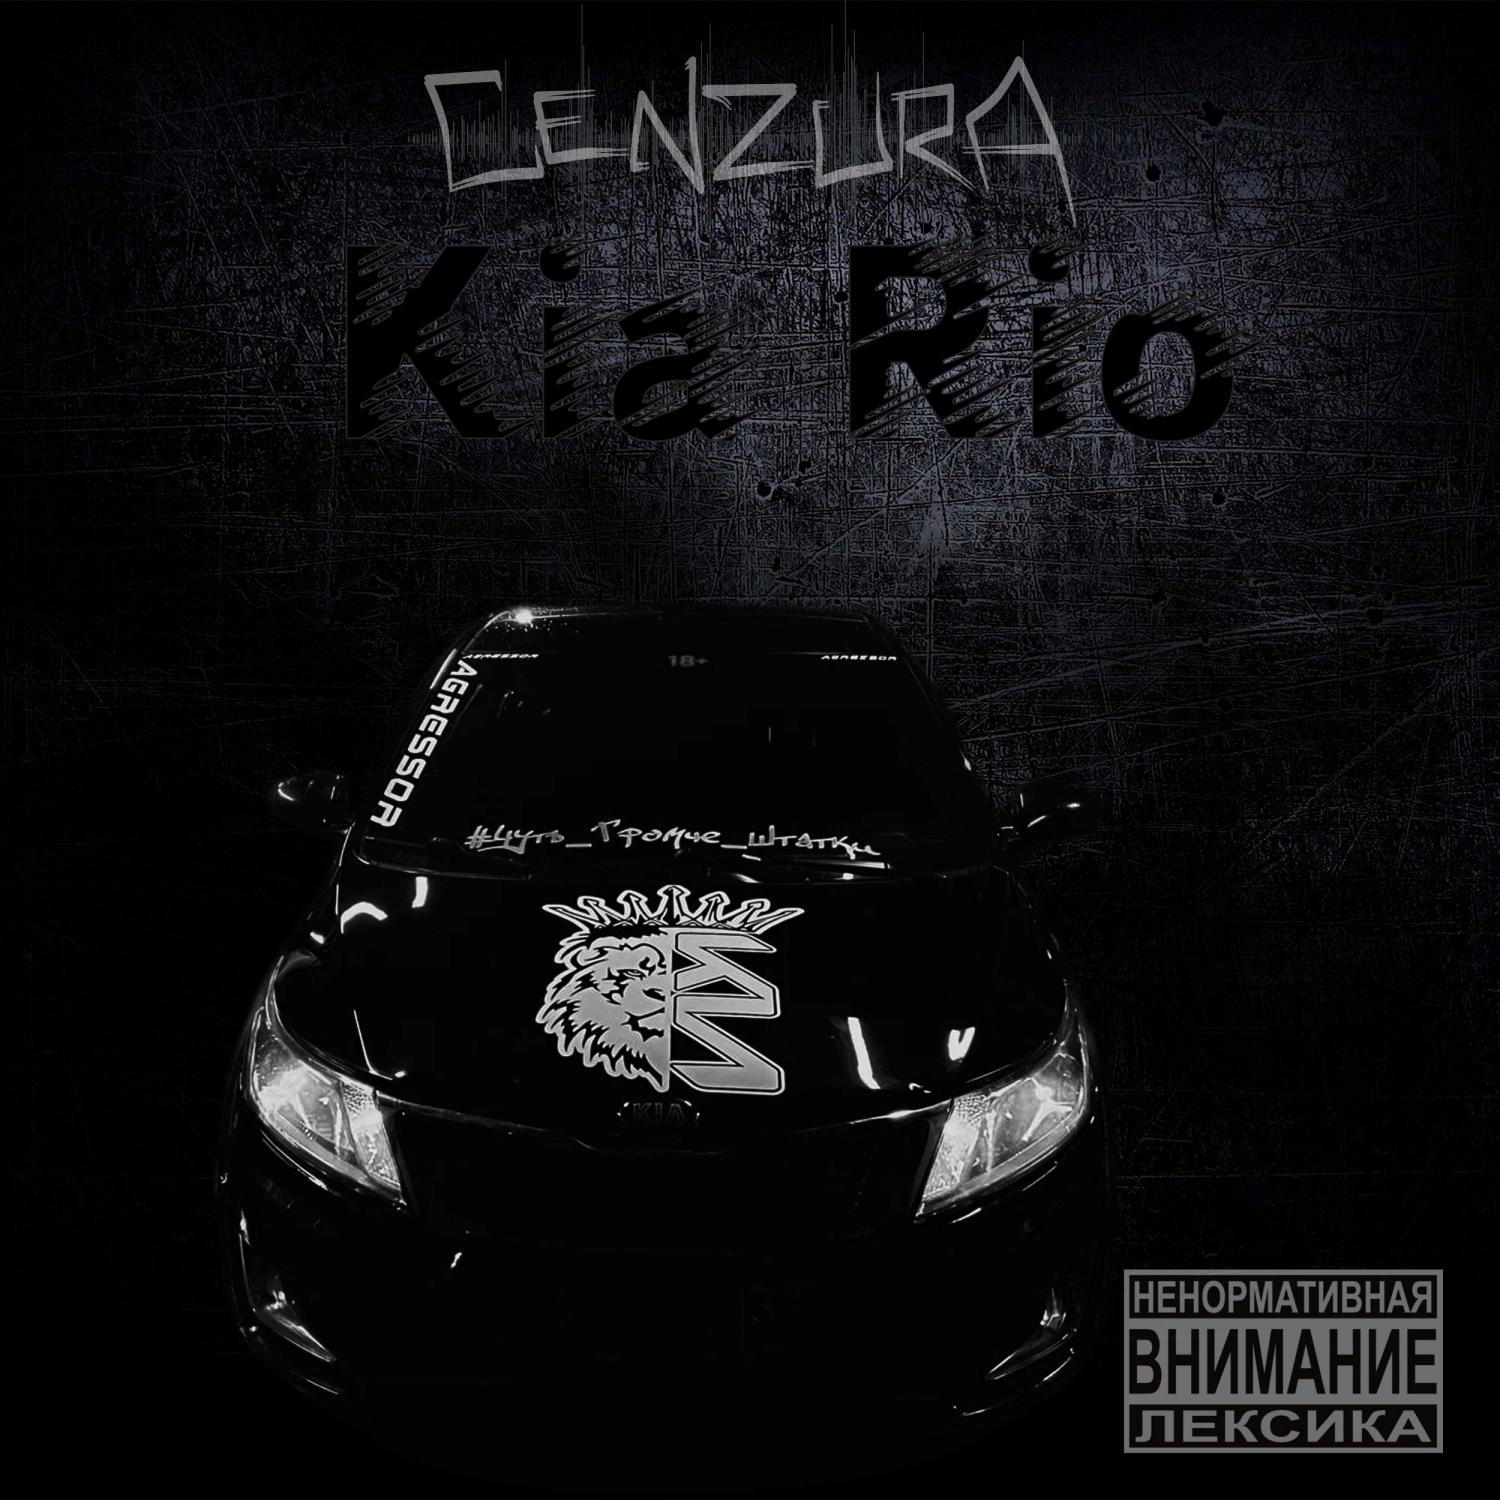 Постер альбома Kia Rio